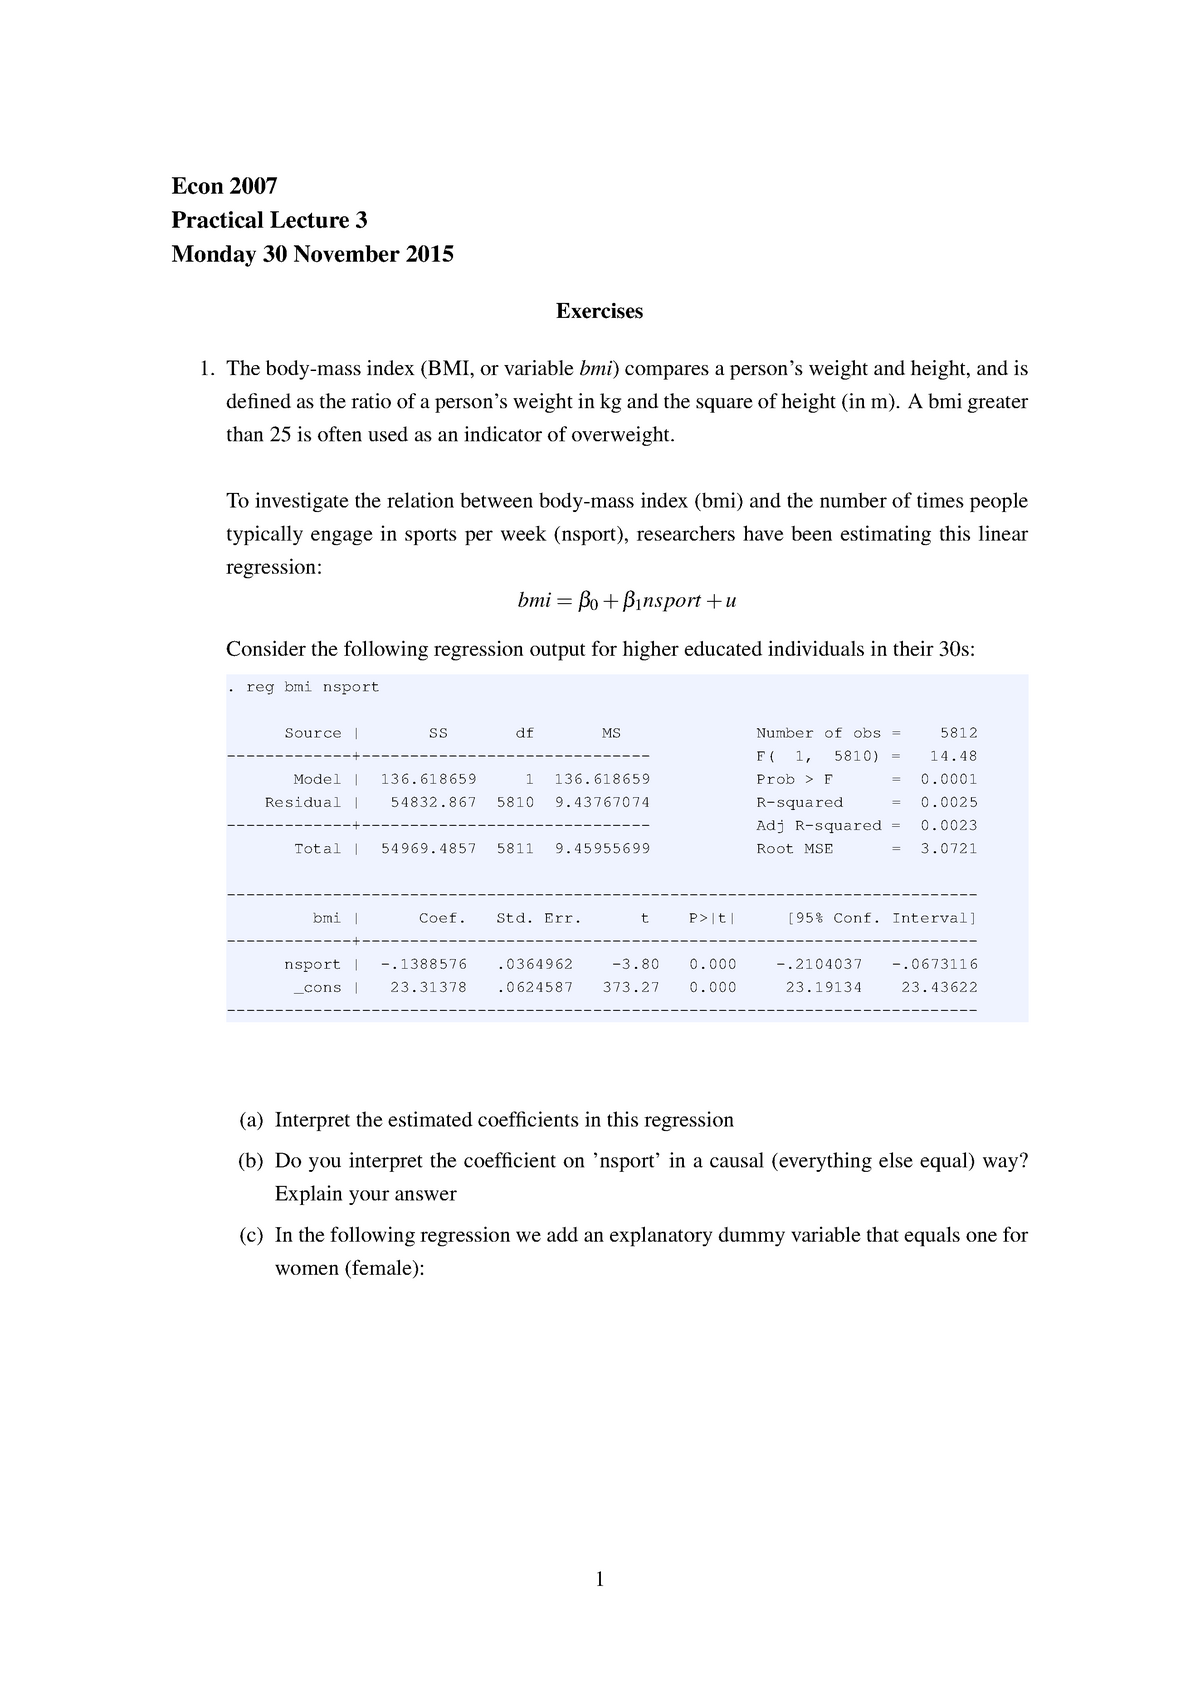 Practical 3 2 Econometrics Notes And Problem Sets Ucl Studocu